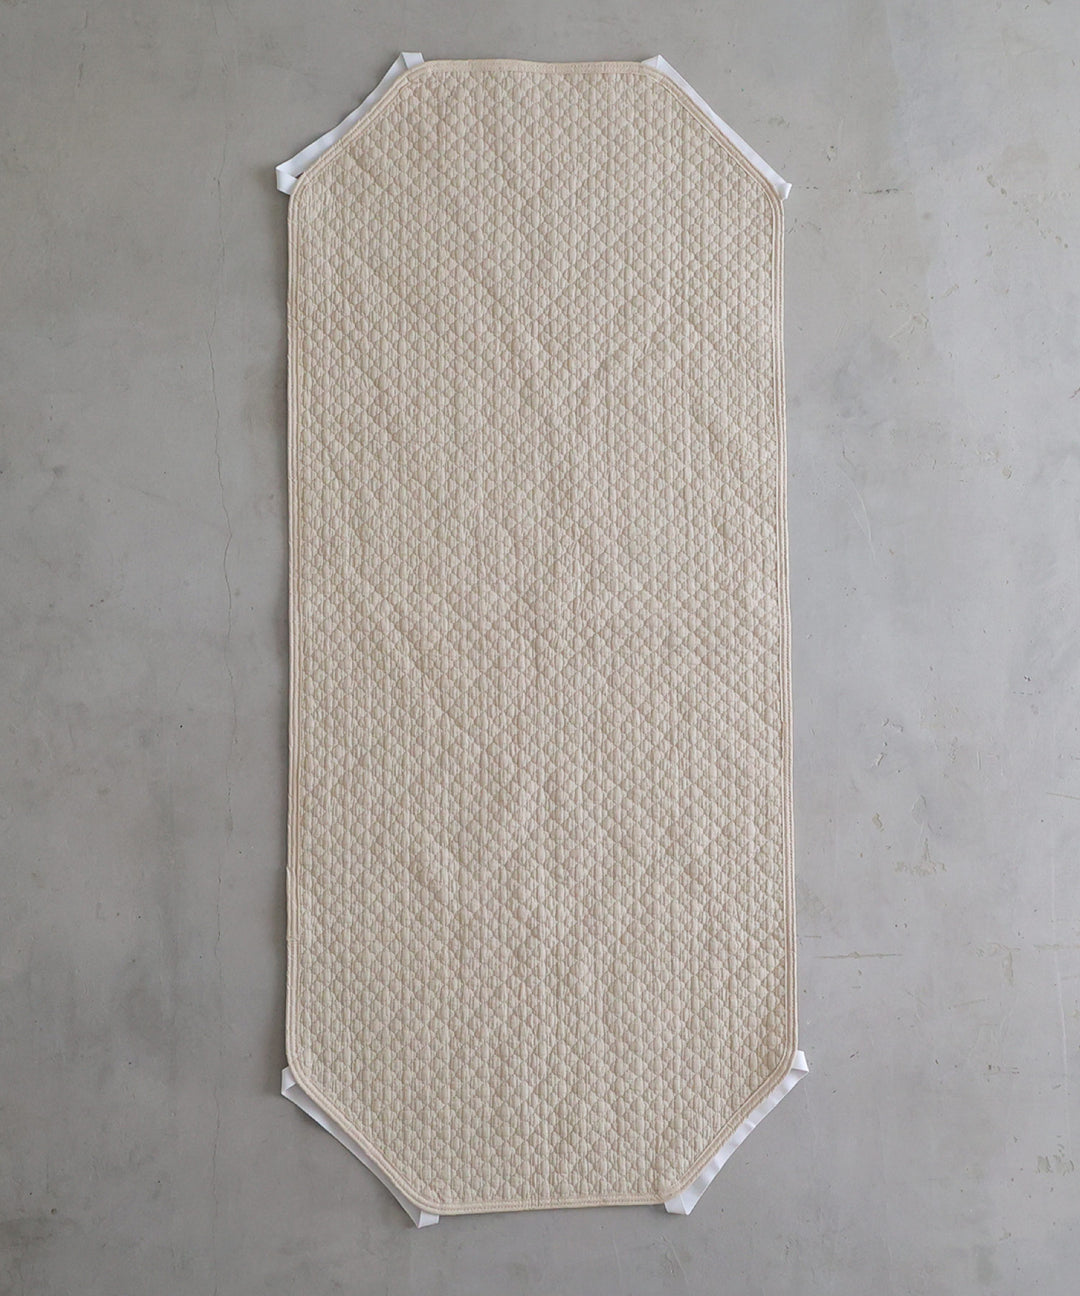 Nap cot sheet (Ibul fabric with Moroccan design)